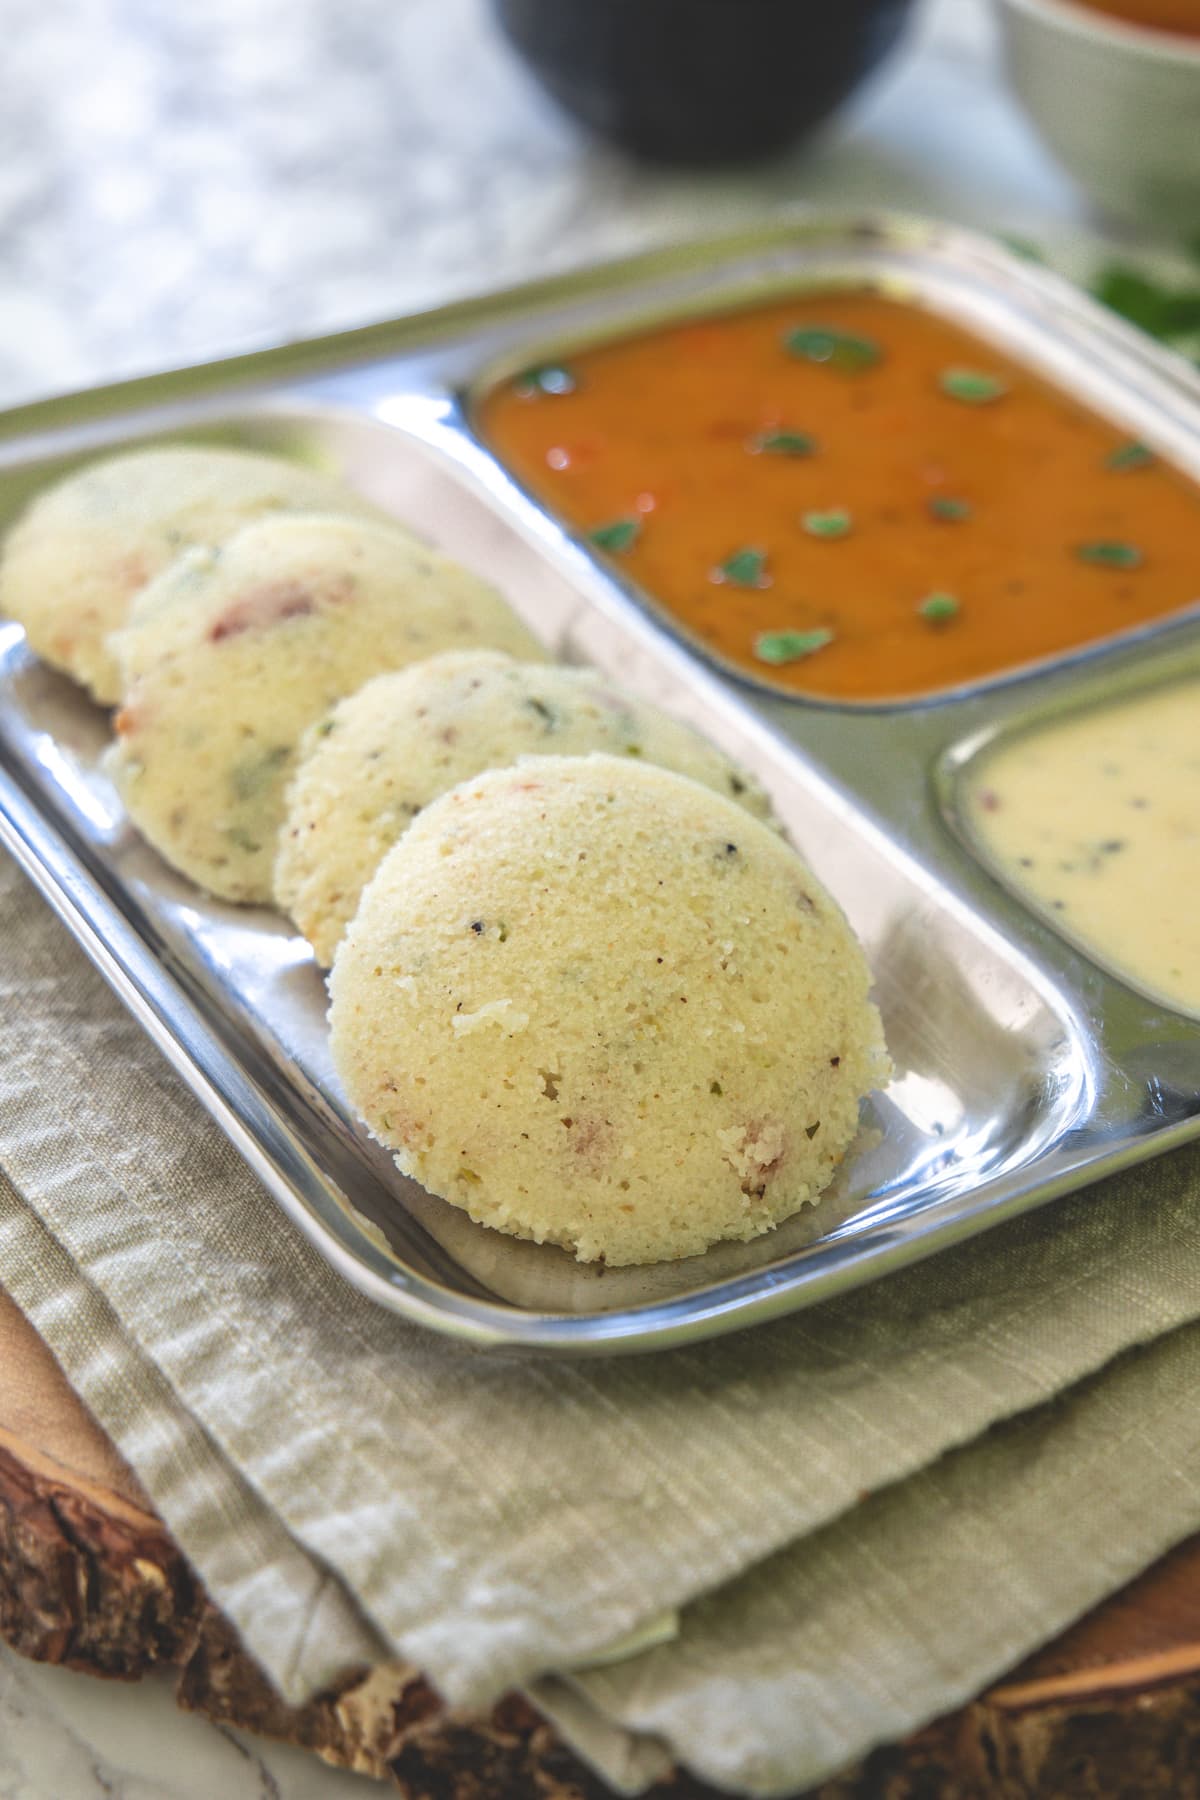 Rava idli in a plate with sambar and chutney.